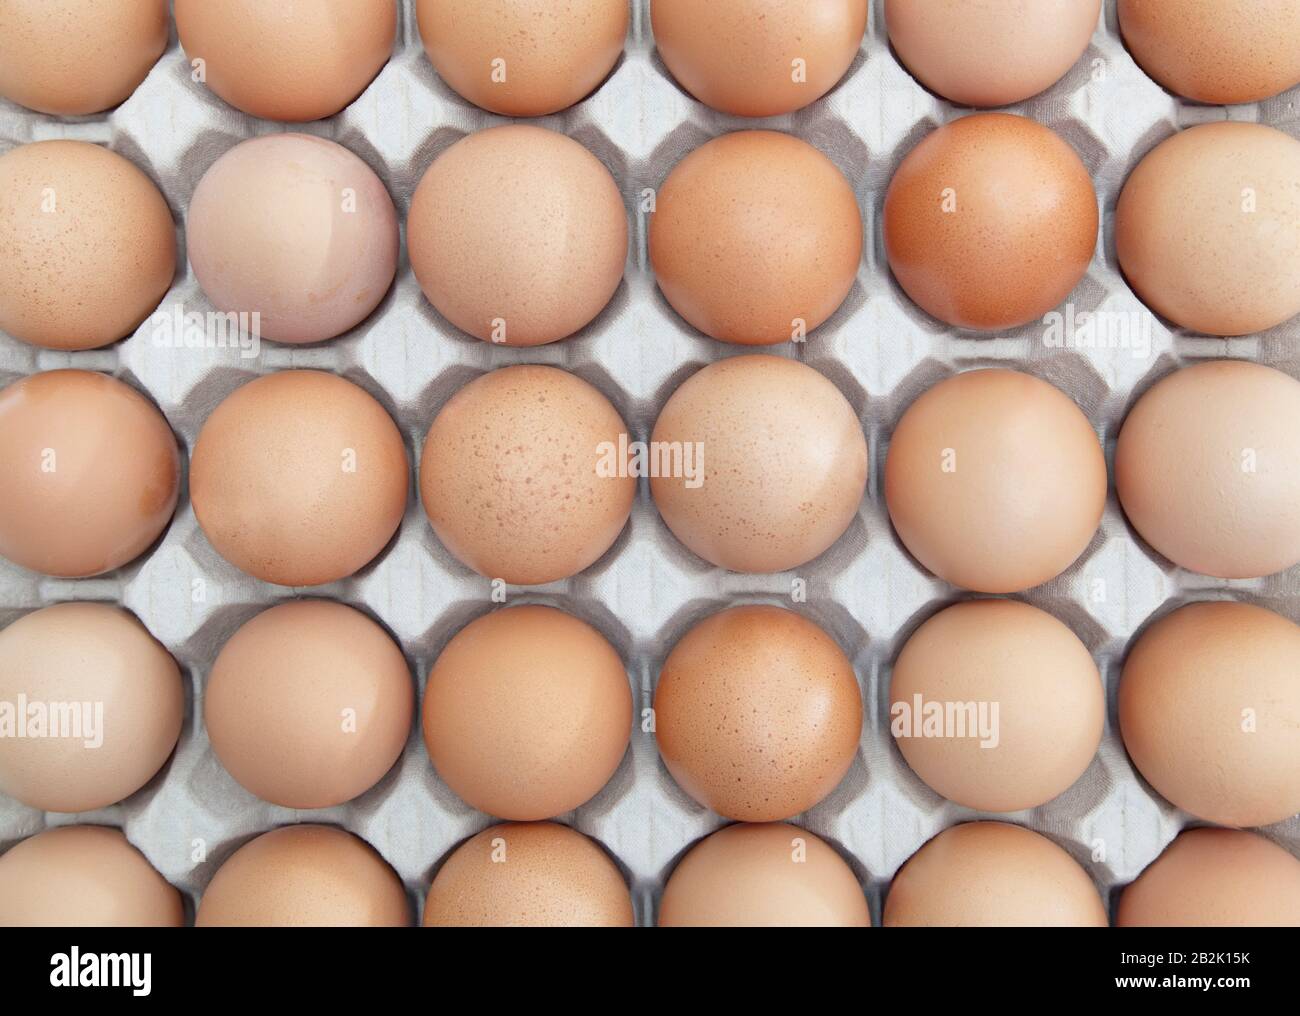 Full-Frame shot of brown eggs arranged in carton Stock Photo